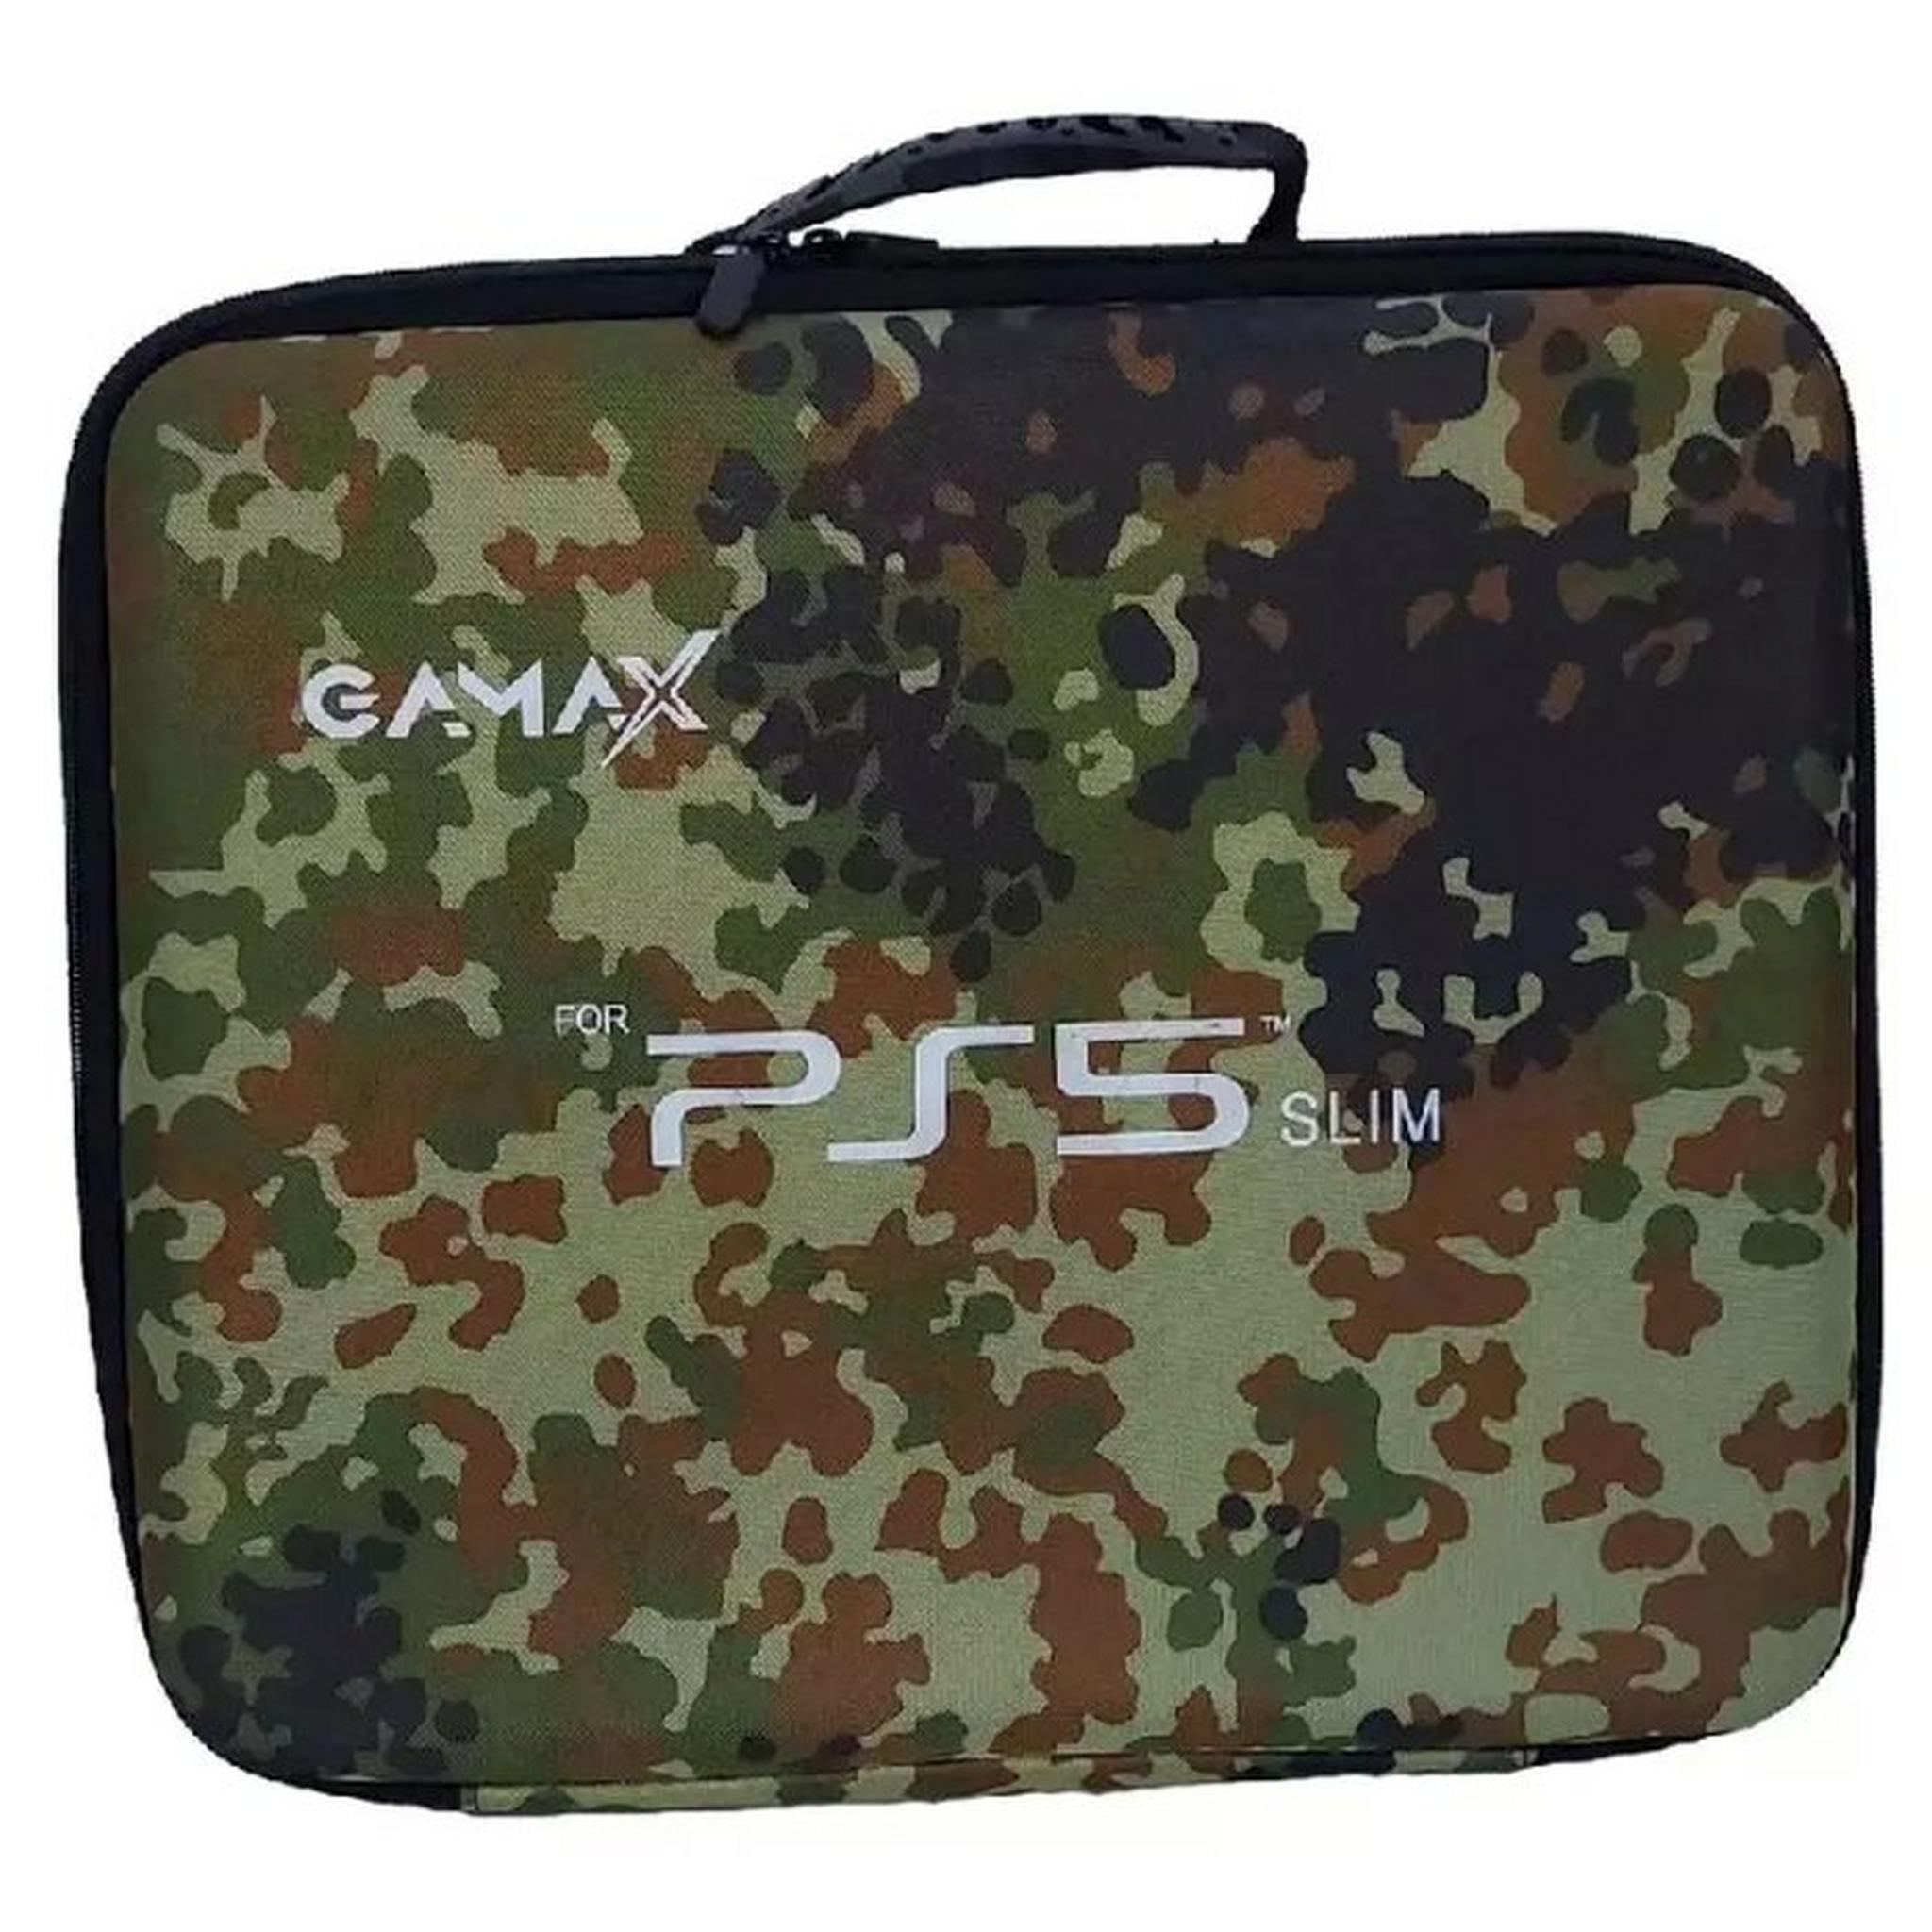 Gamax Storage Bag for PlayStation 5 Slim, STRG-BG-PS5-SLM-AG - Army Green